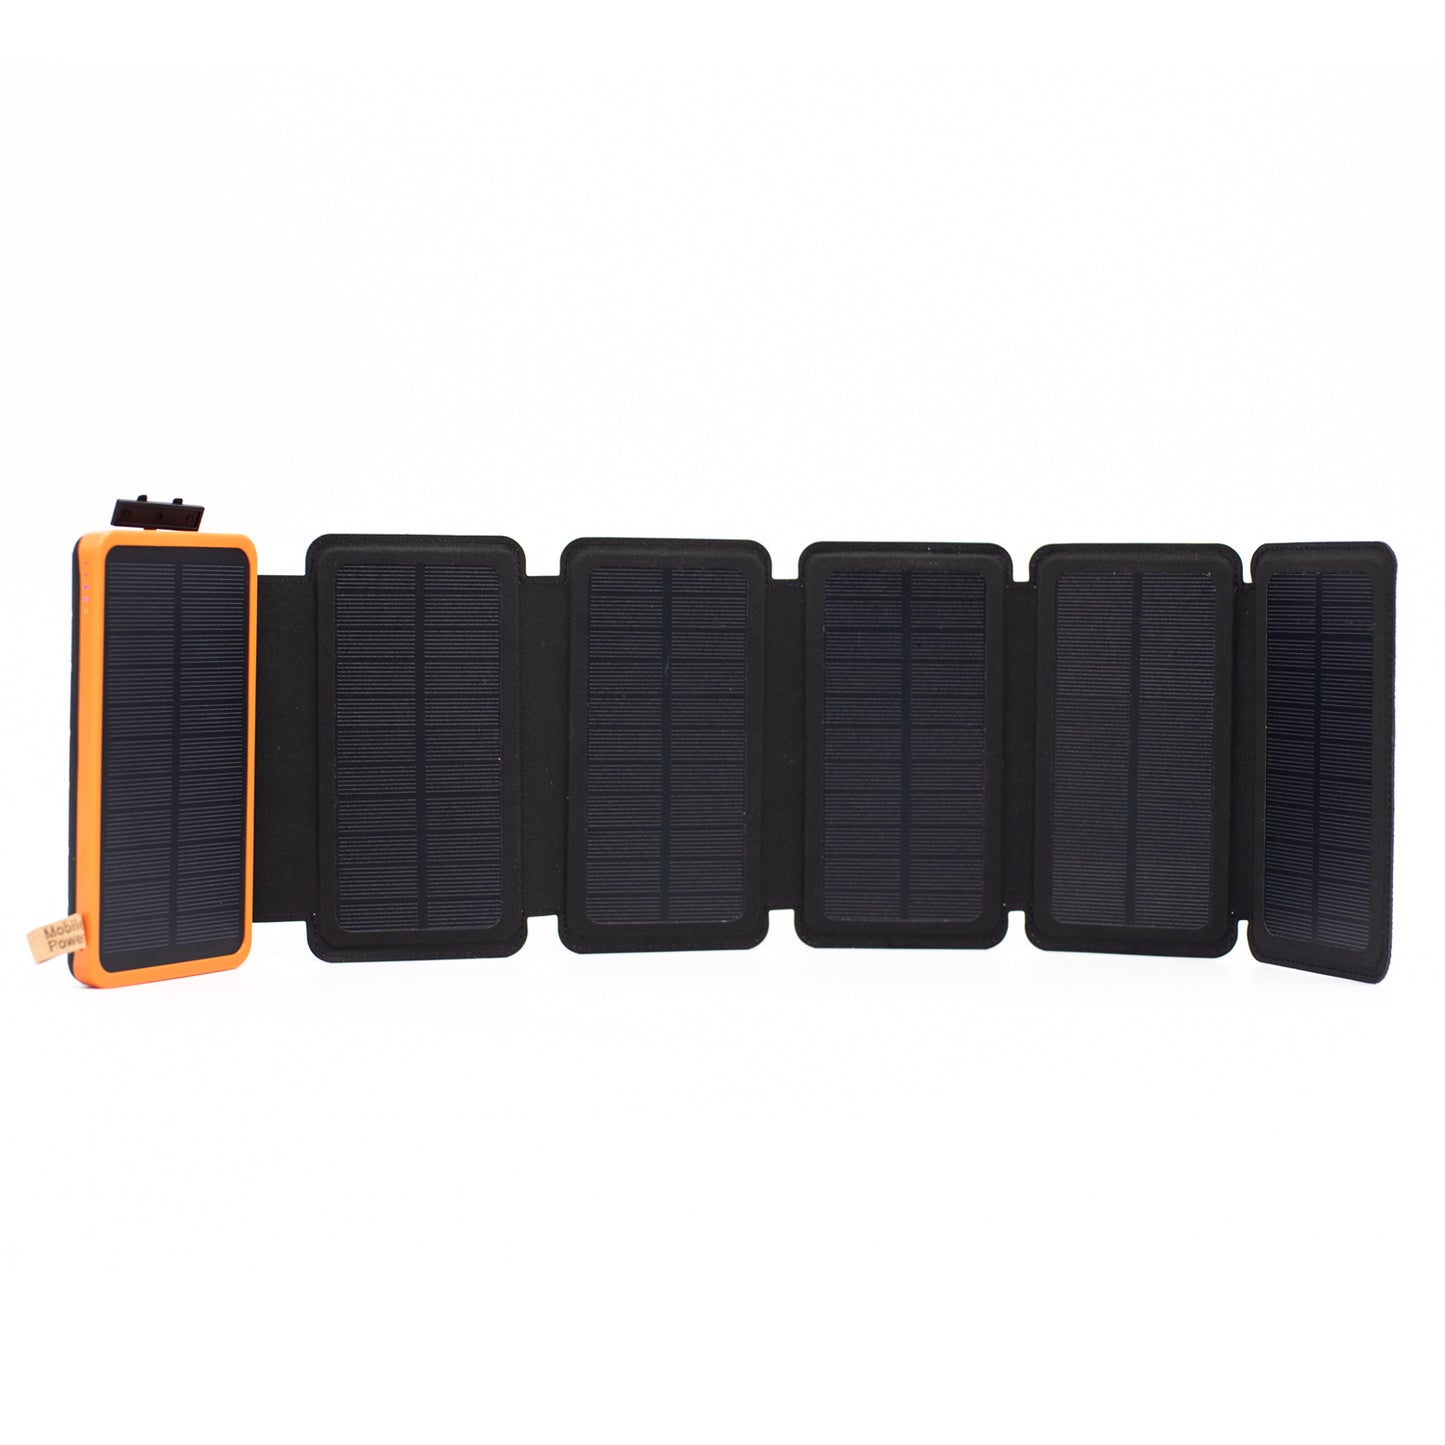 Solar Powerbank Extreme 6 foldable panels - test winner with 25000mAh